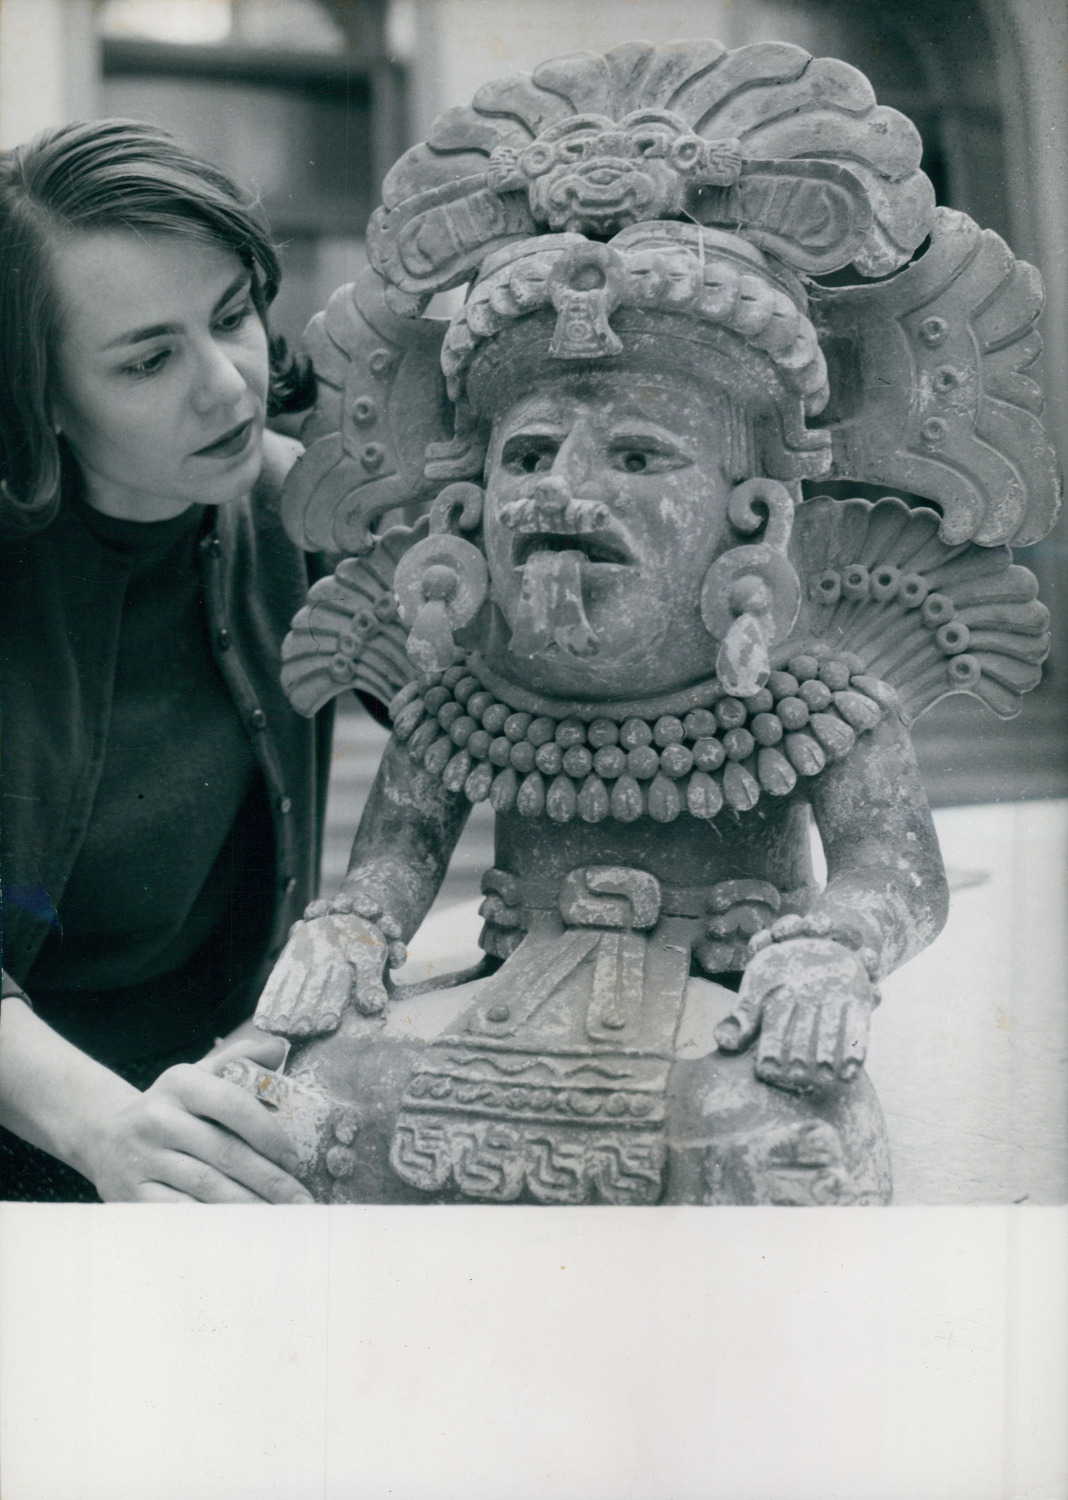 Mortuary vase and pre-Columbian art exhibited in Paris, 1959, vintage silver print vi